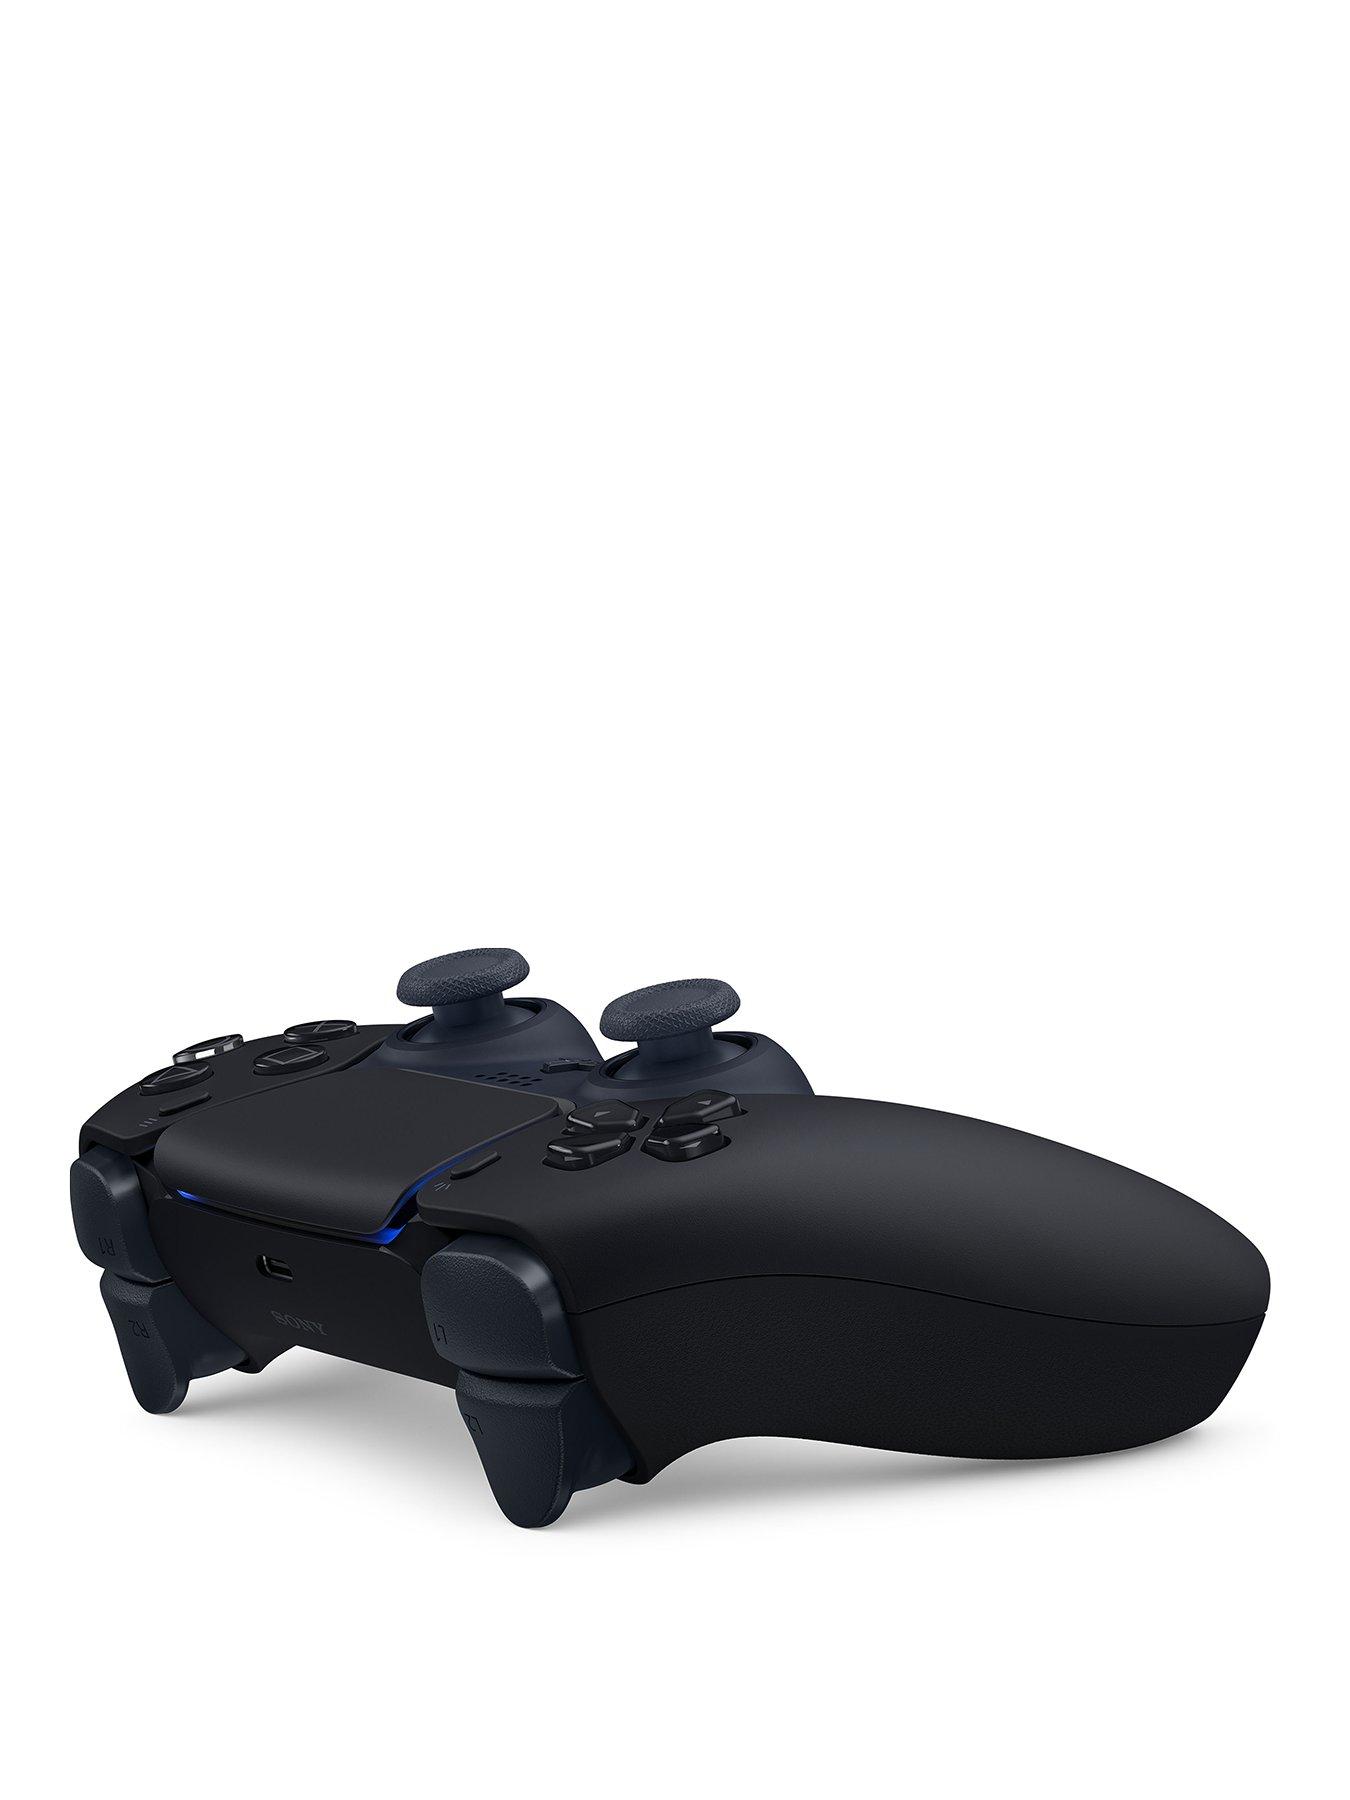 Sony PS5 DualSense Wireless Controller - Midnight Black 